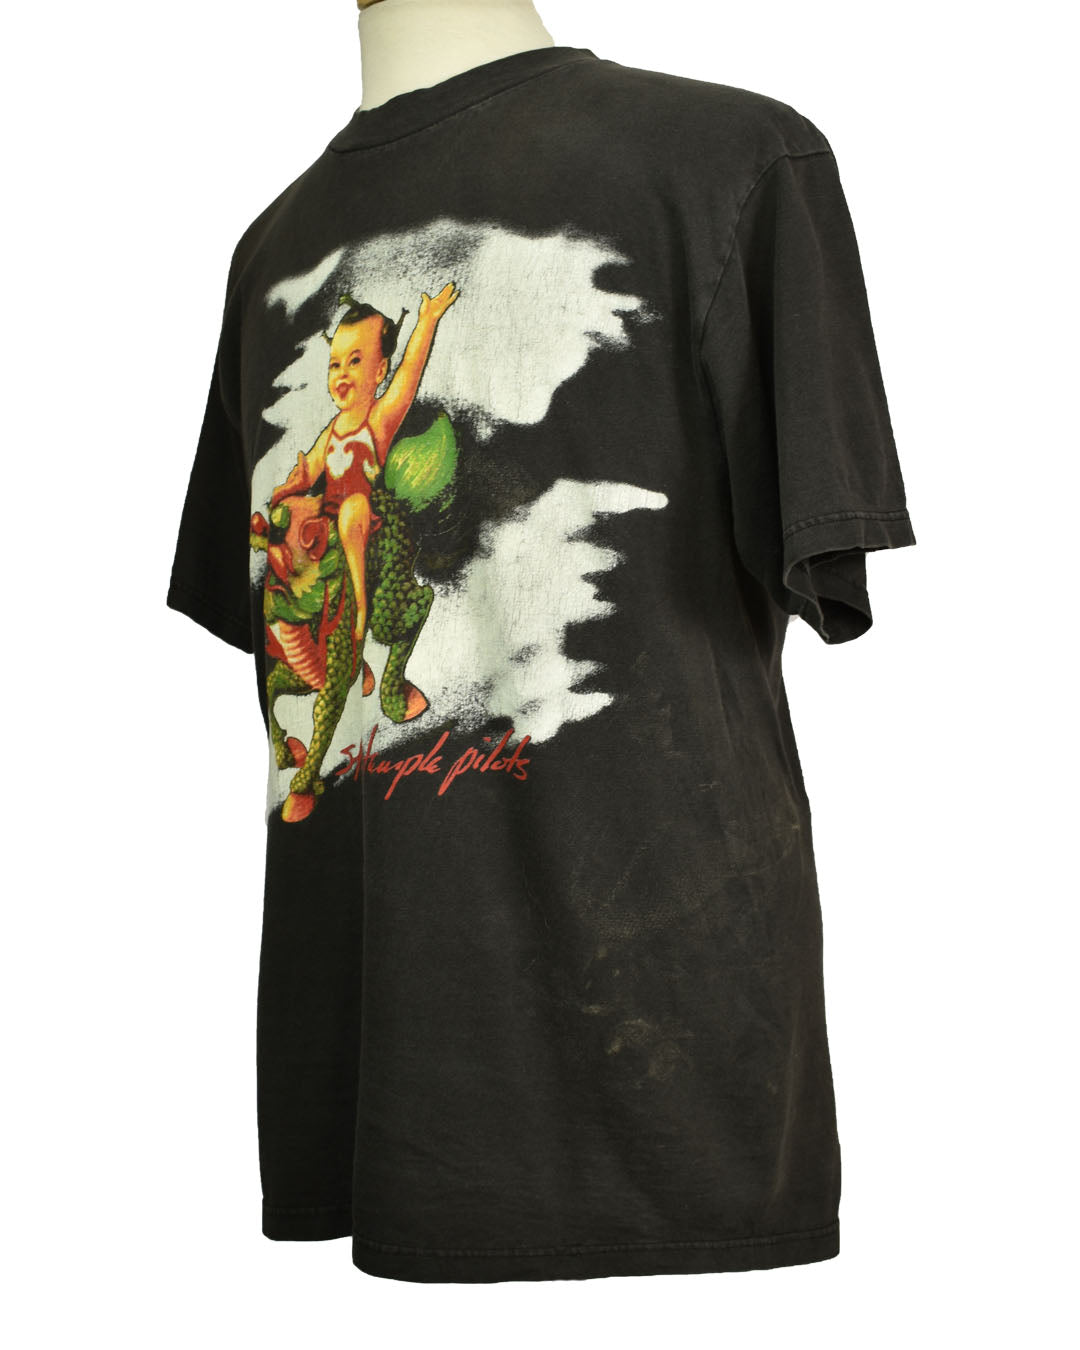 Stone Temple PilotsヴィンテージTシャツ | labiela.com